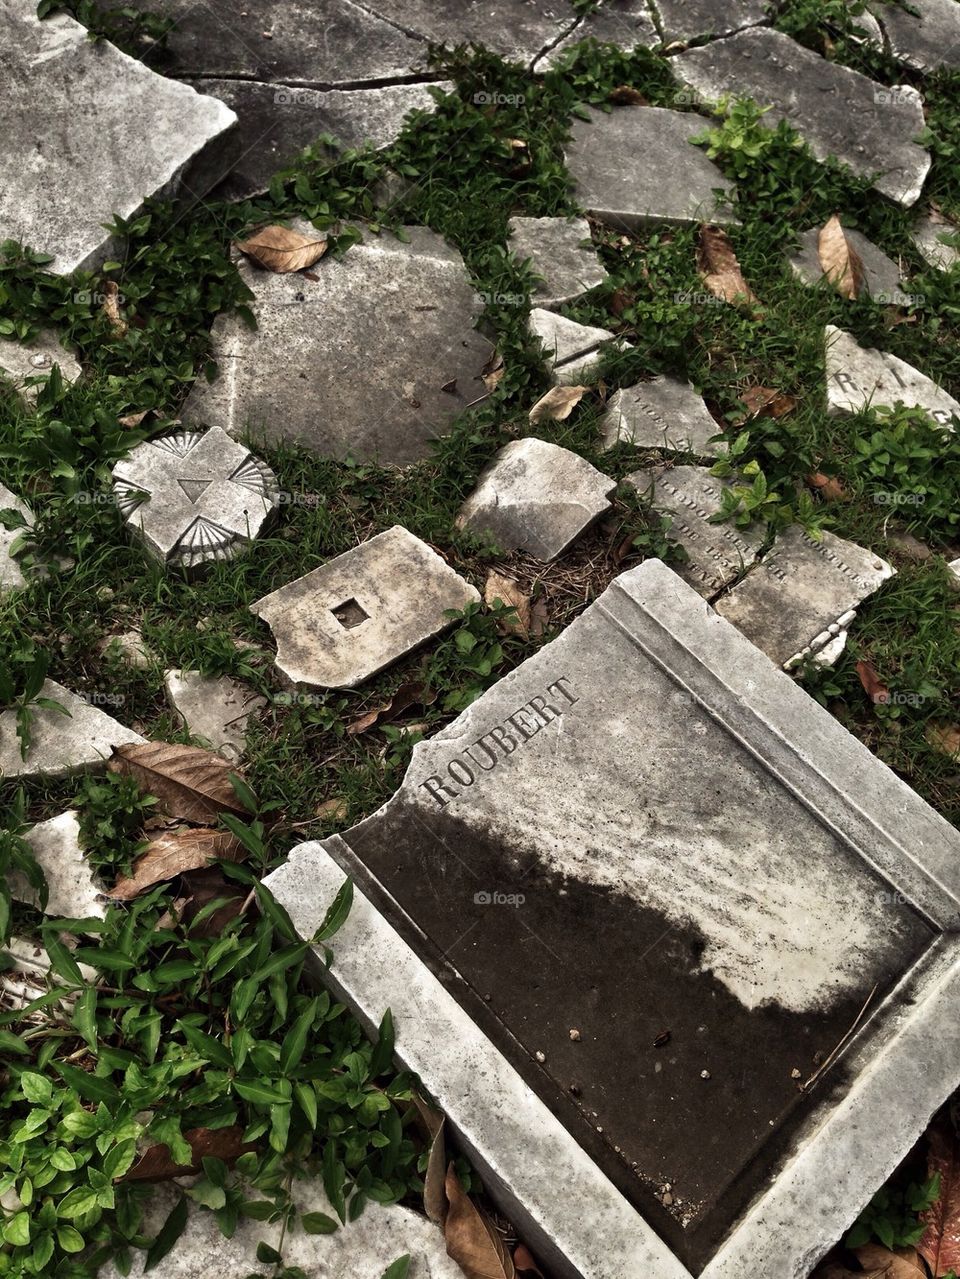 Broken gravestone 